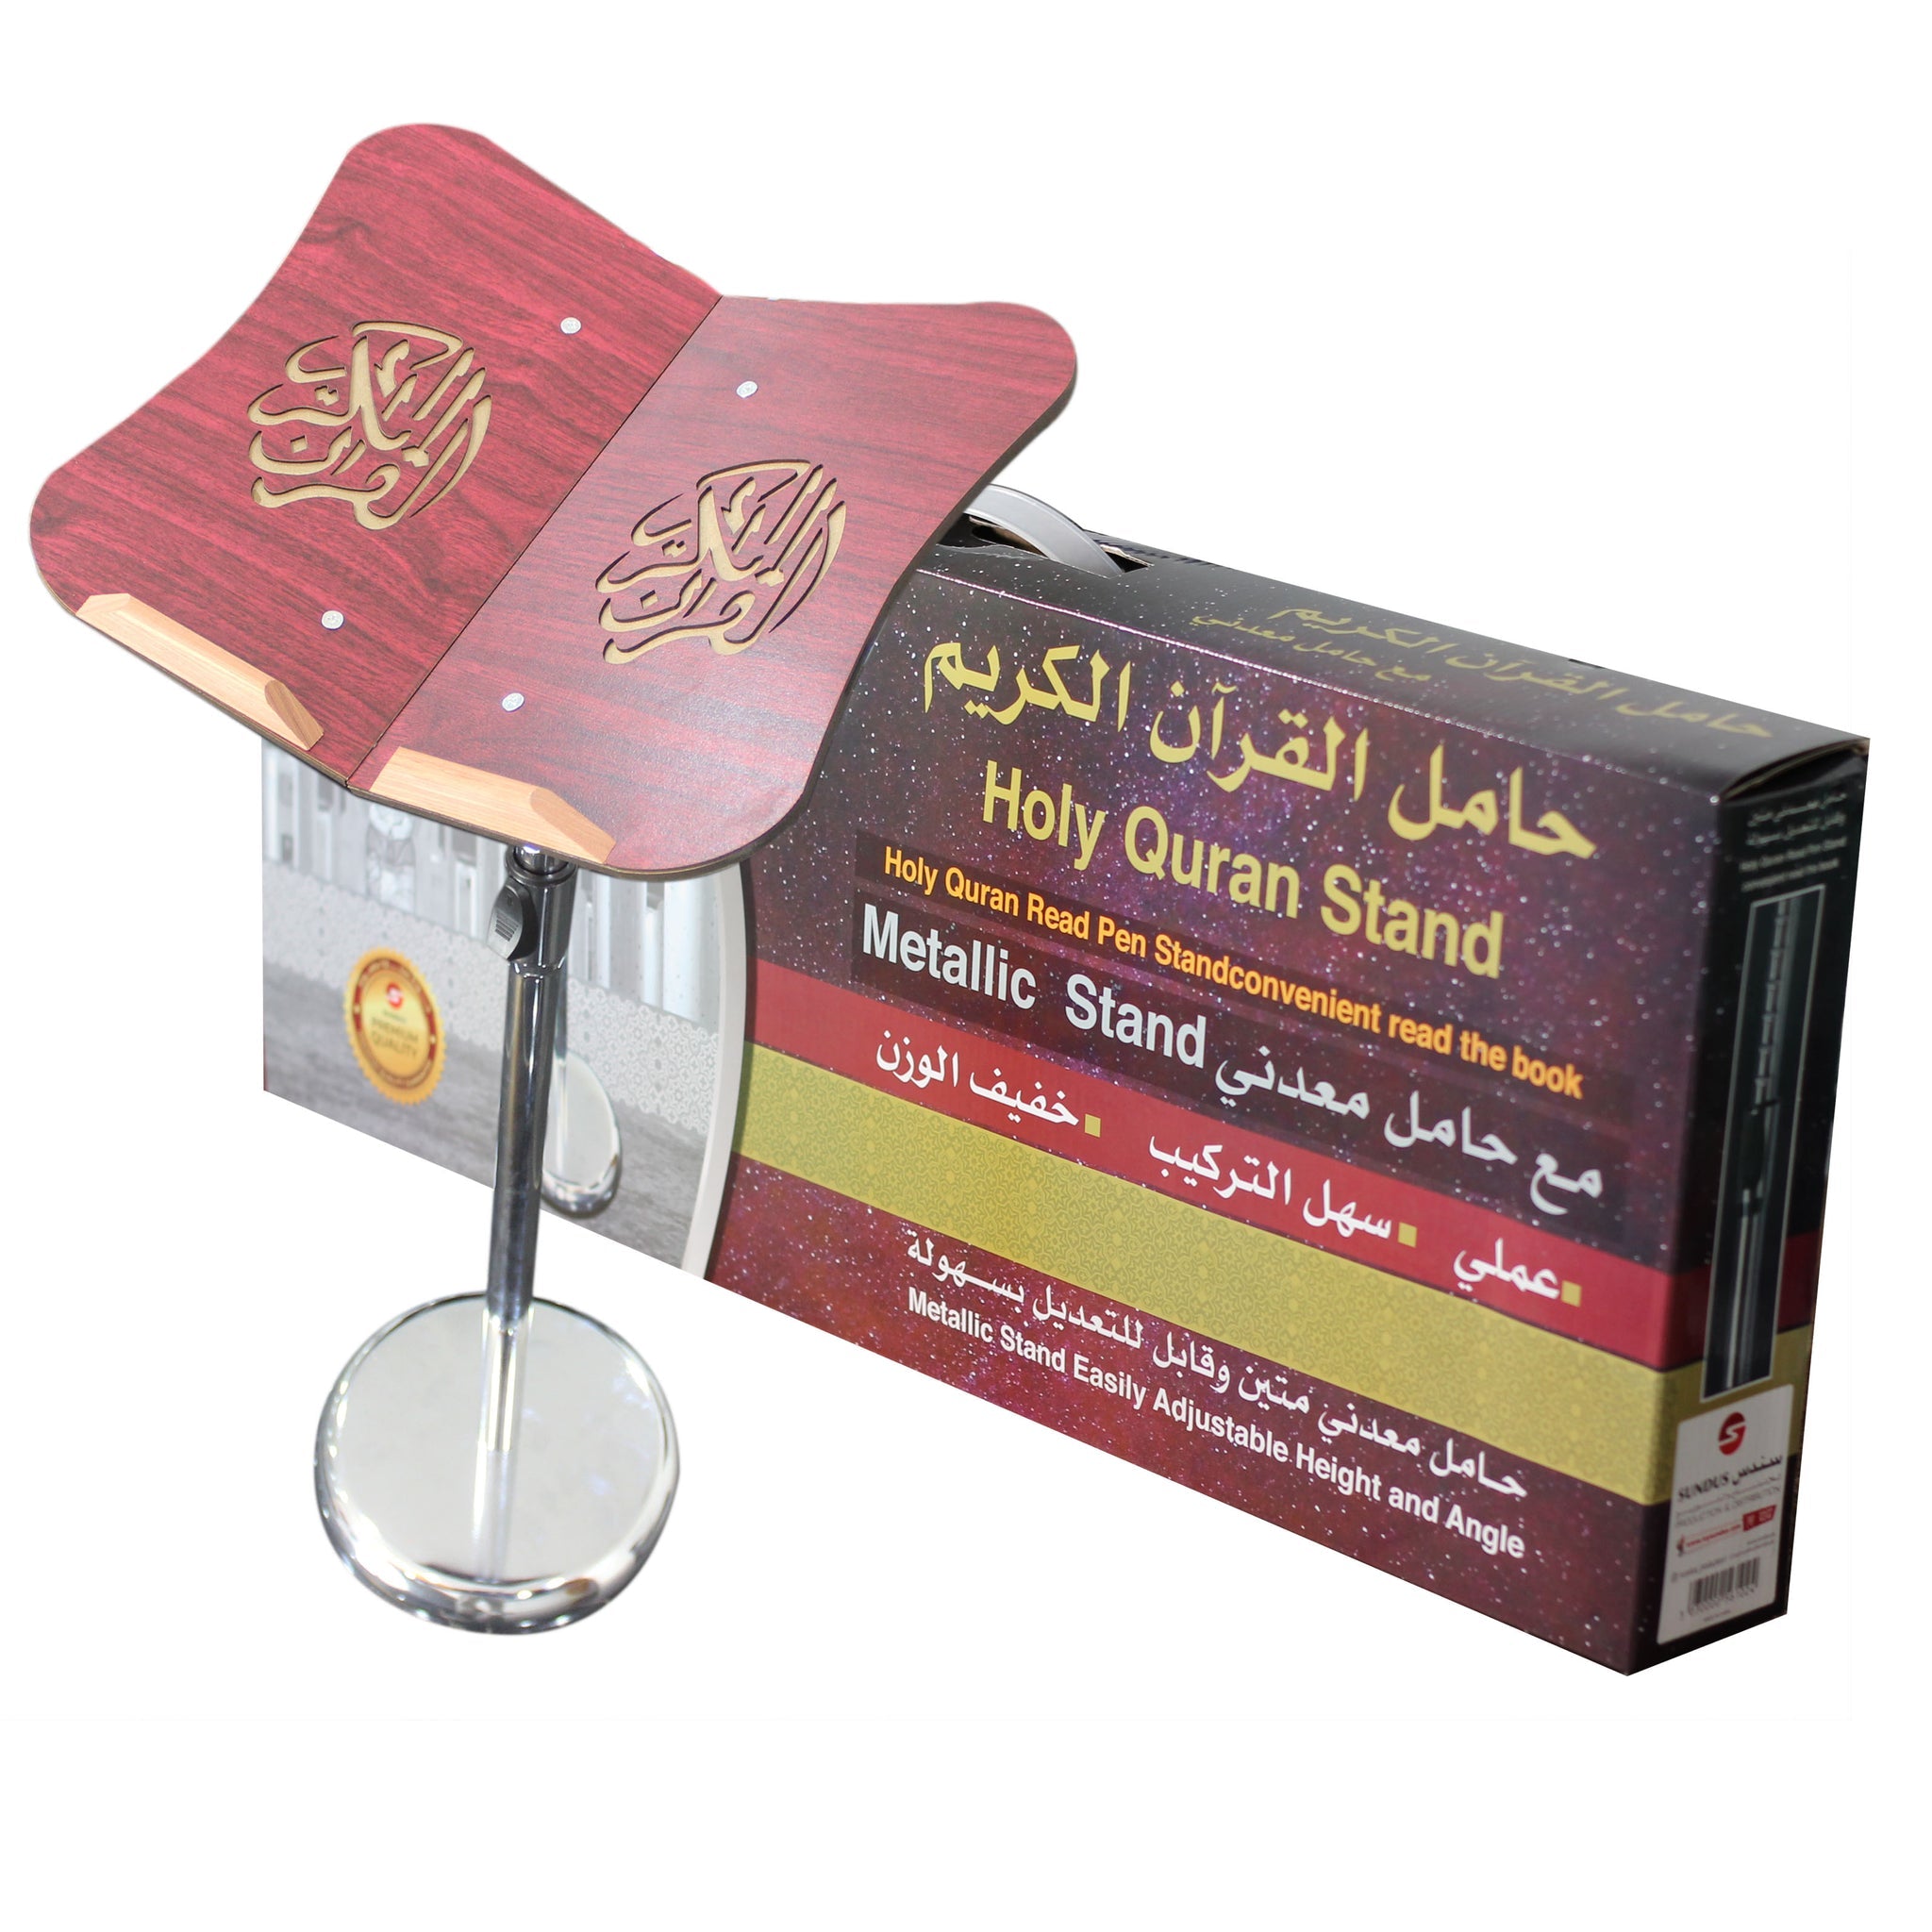 Holy Quran Stand - Metallic